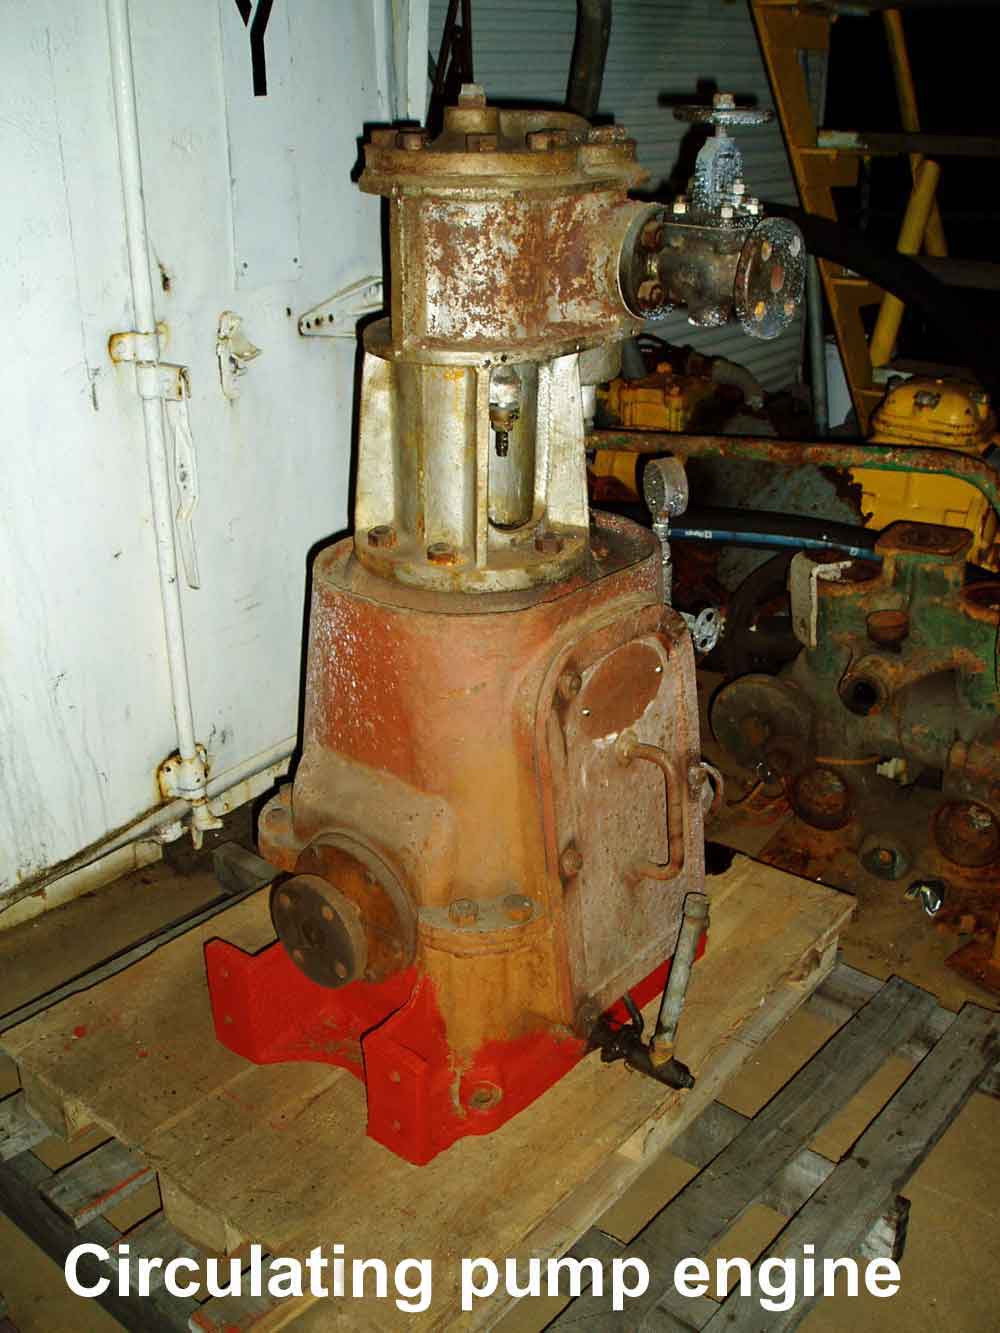 Matthew Paul circulating pump engine before restoration